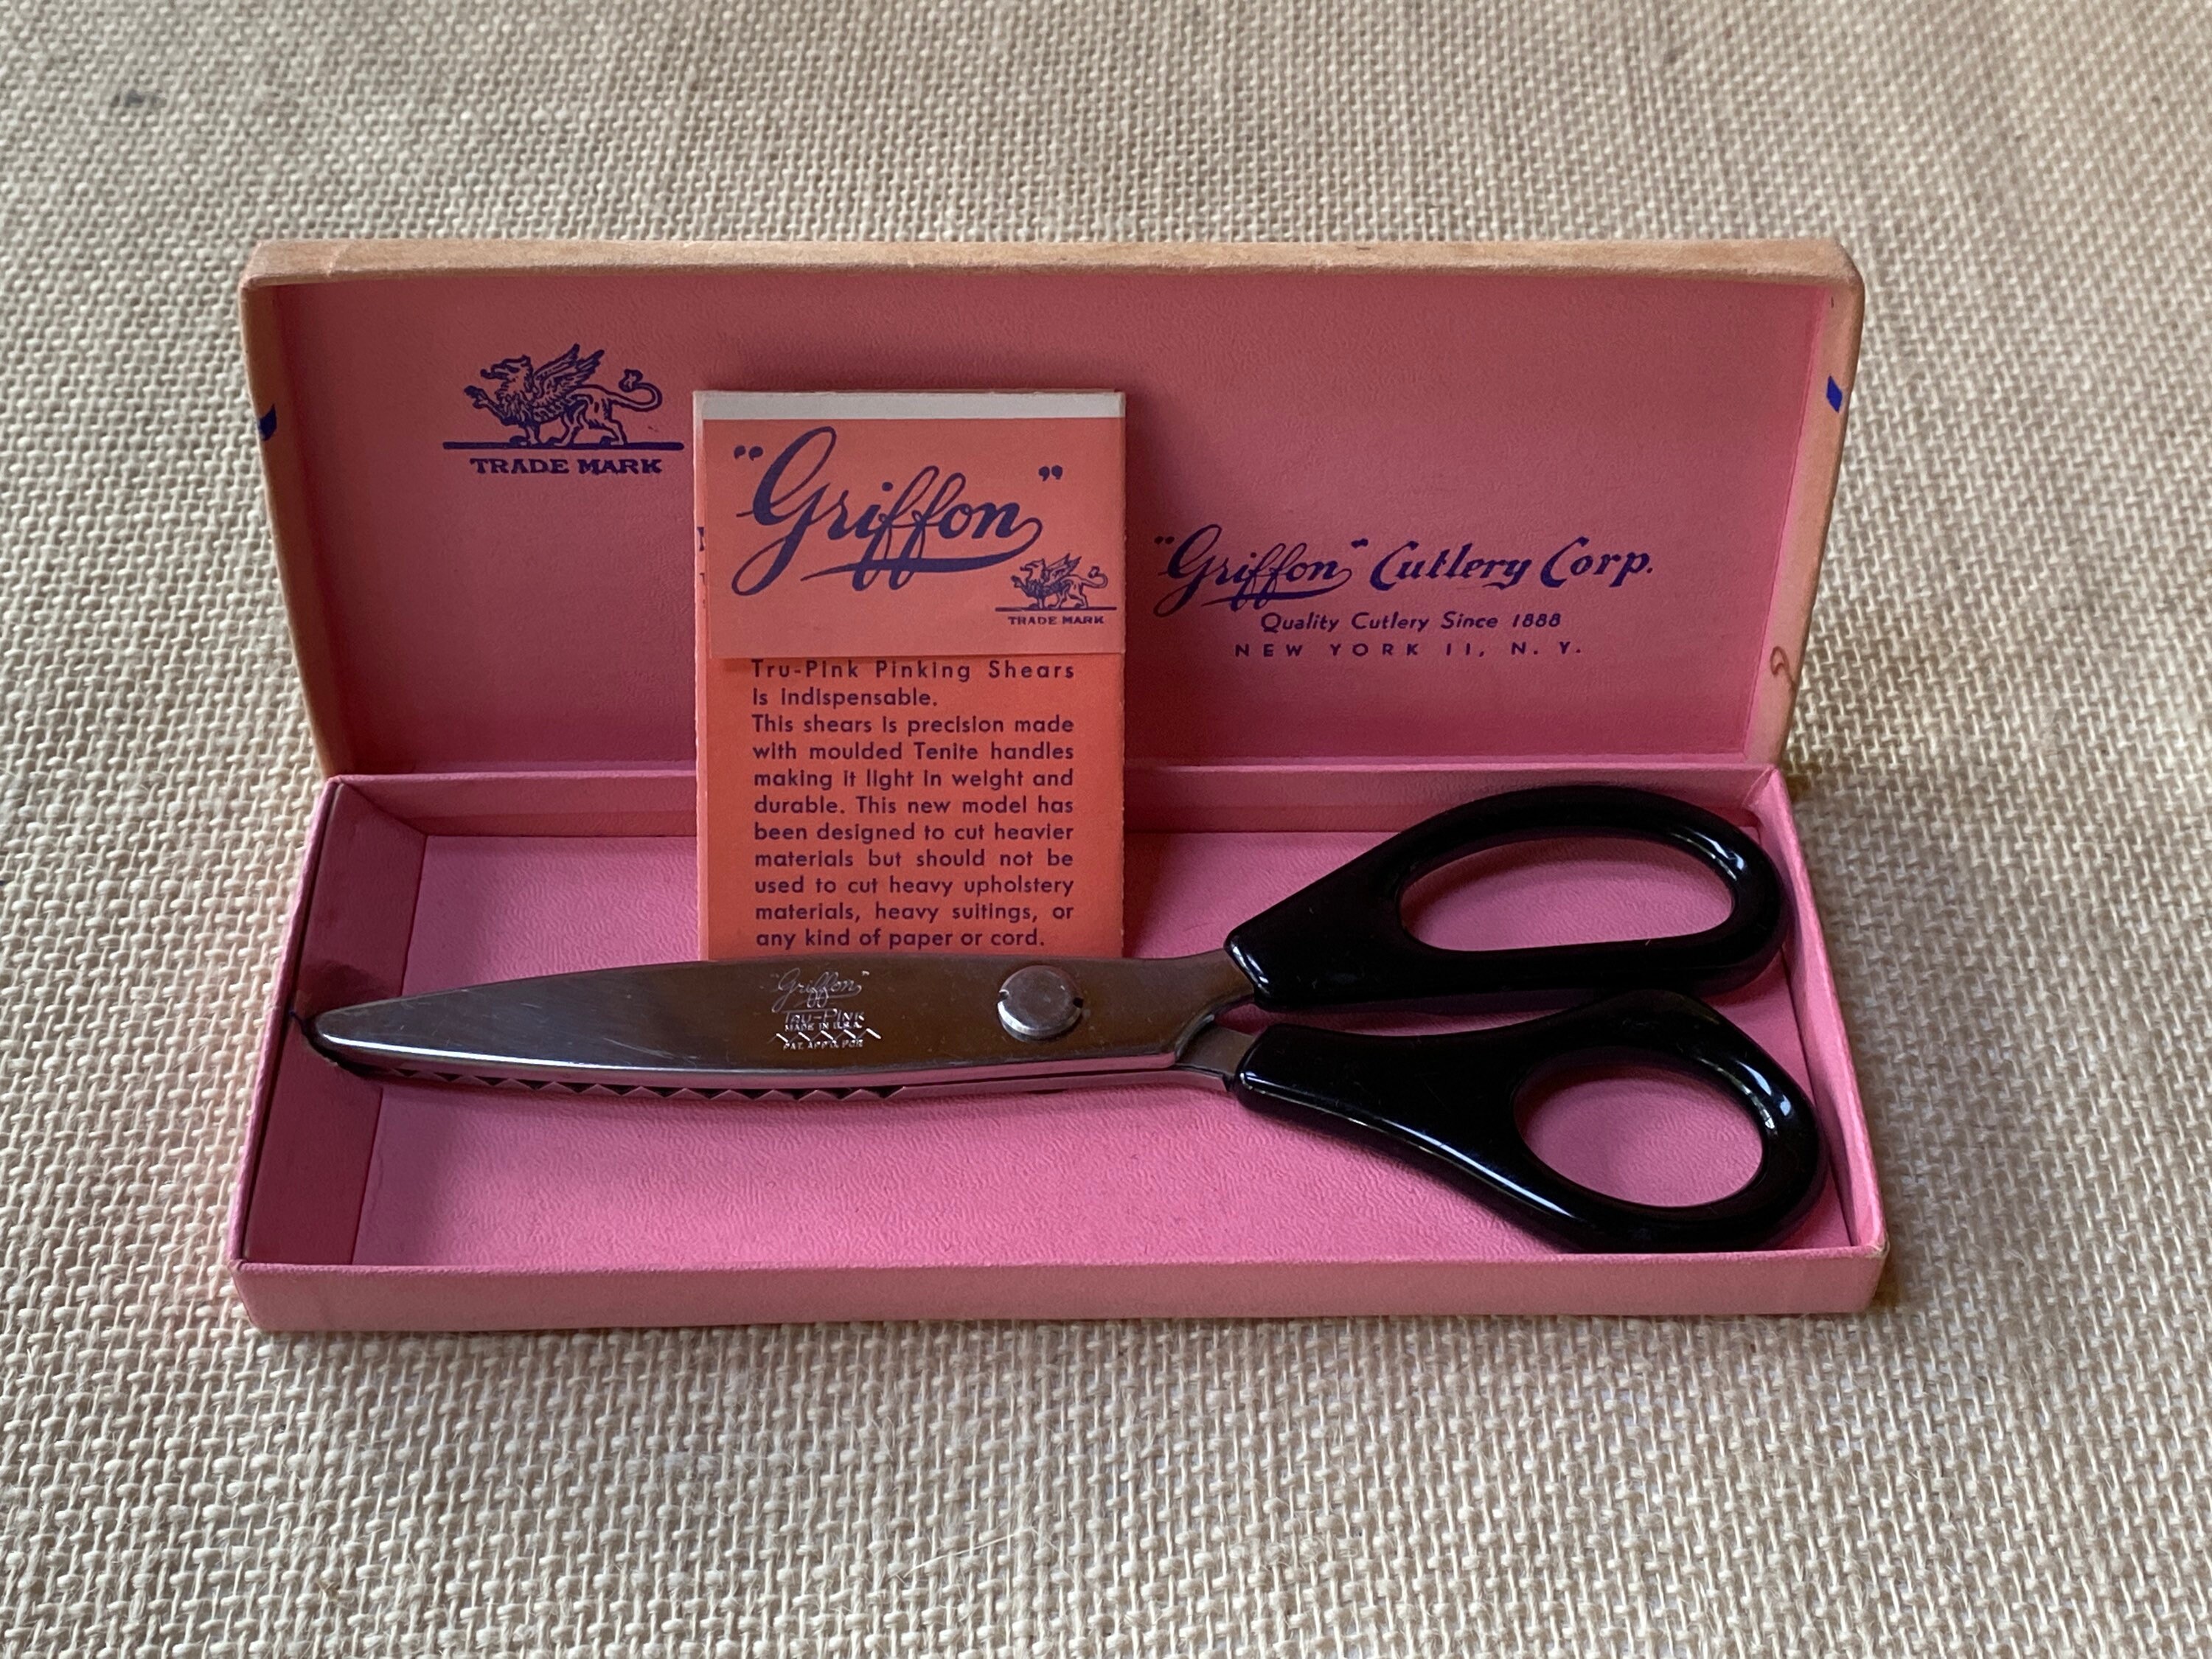 Vintage Griffon Tru-Pink Pinking Sewing Shears Scissors - Made USA